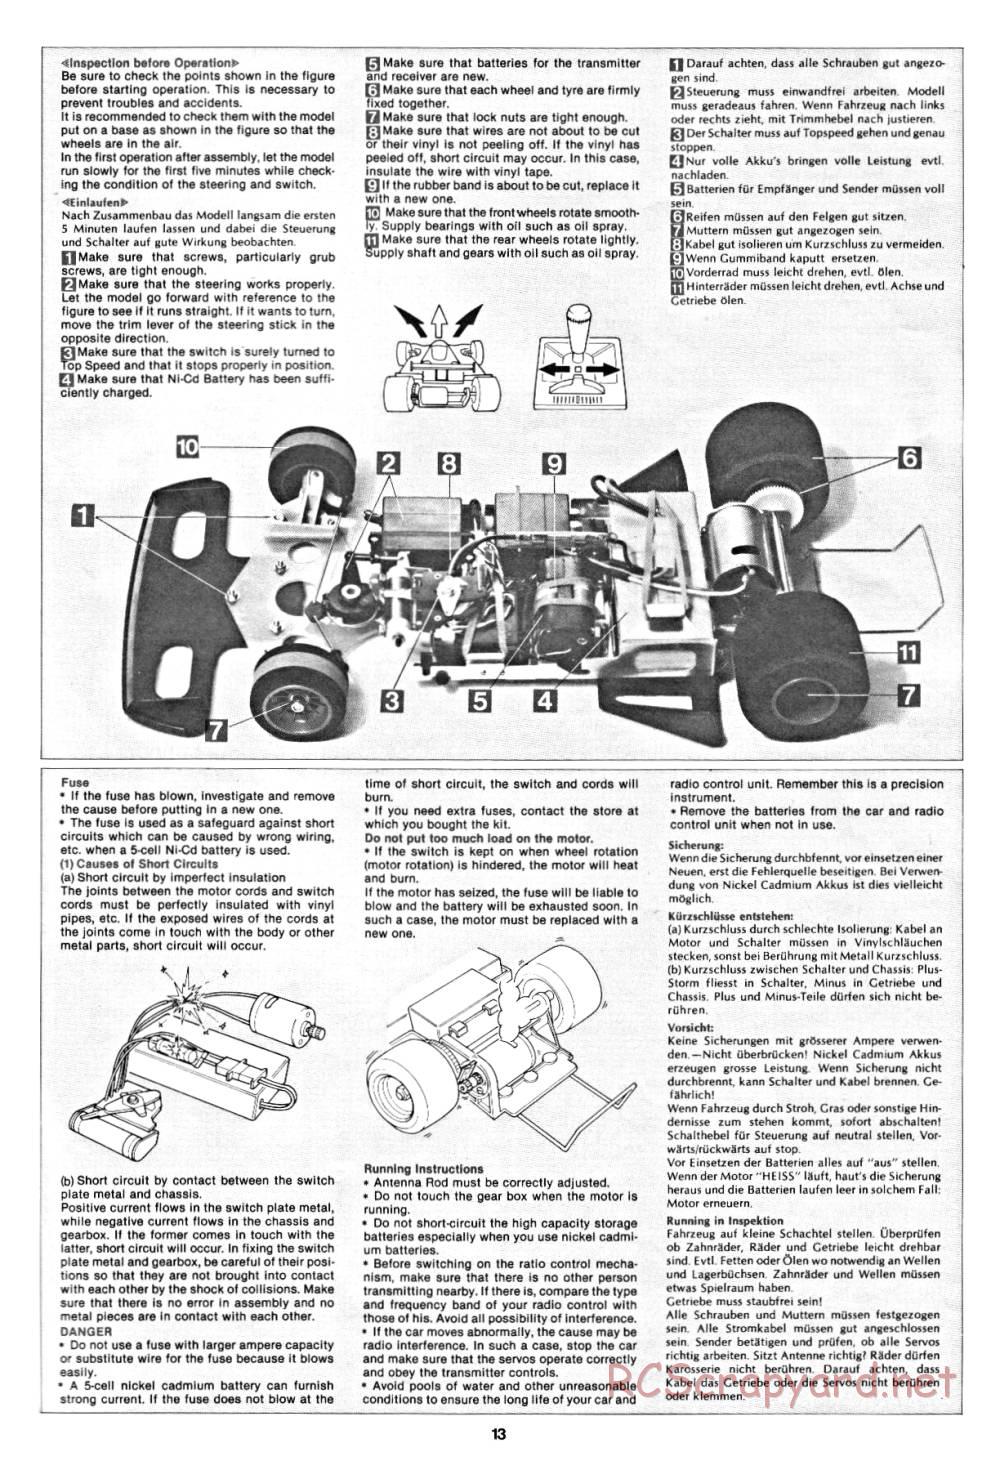 Tamiya - JPS Lotus 79 (CS) - 58020 - Manual - Page 13